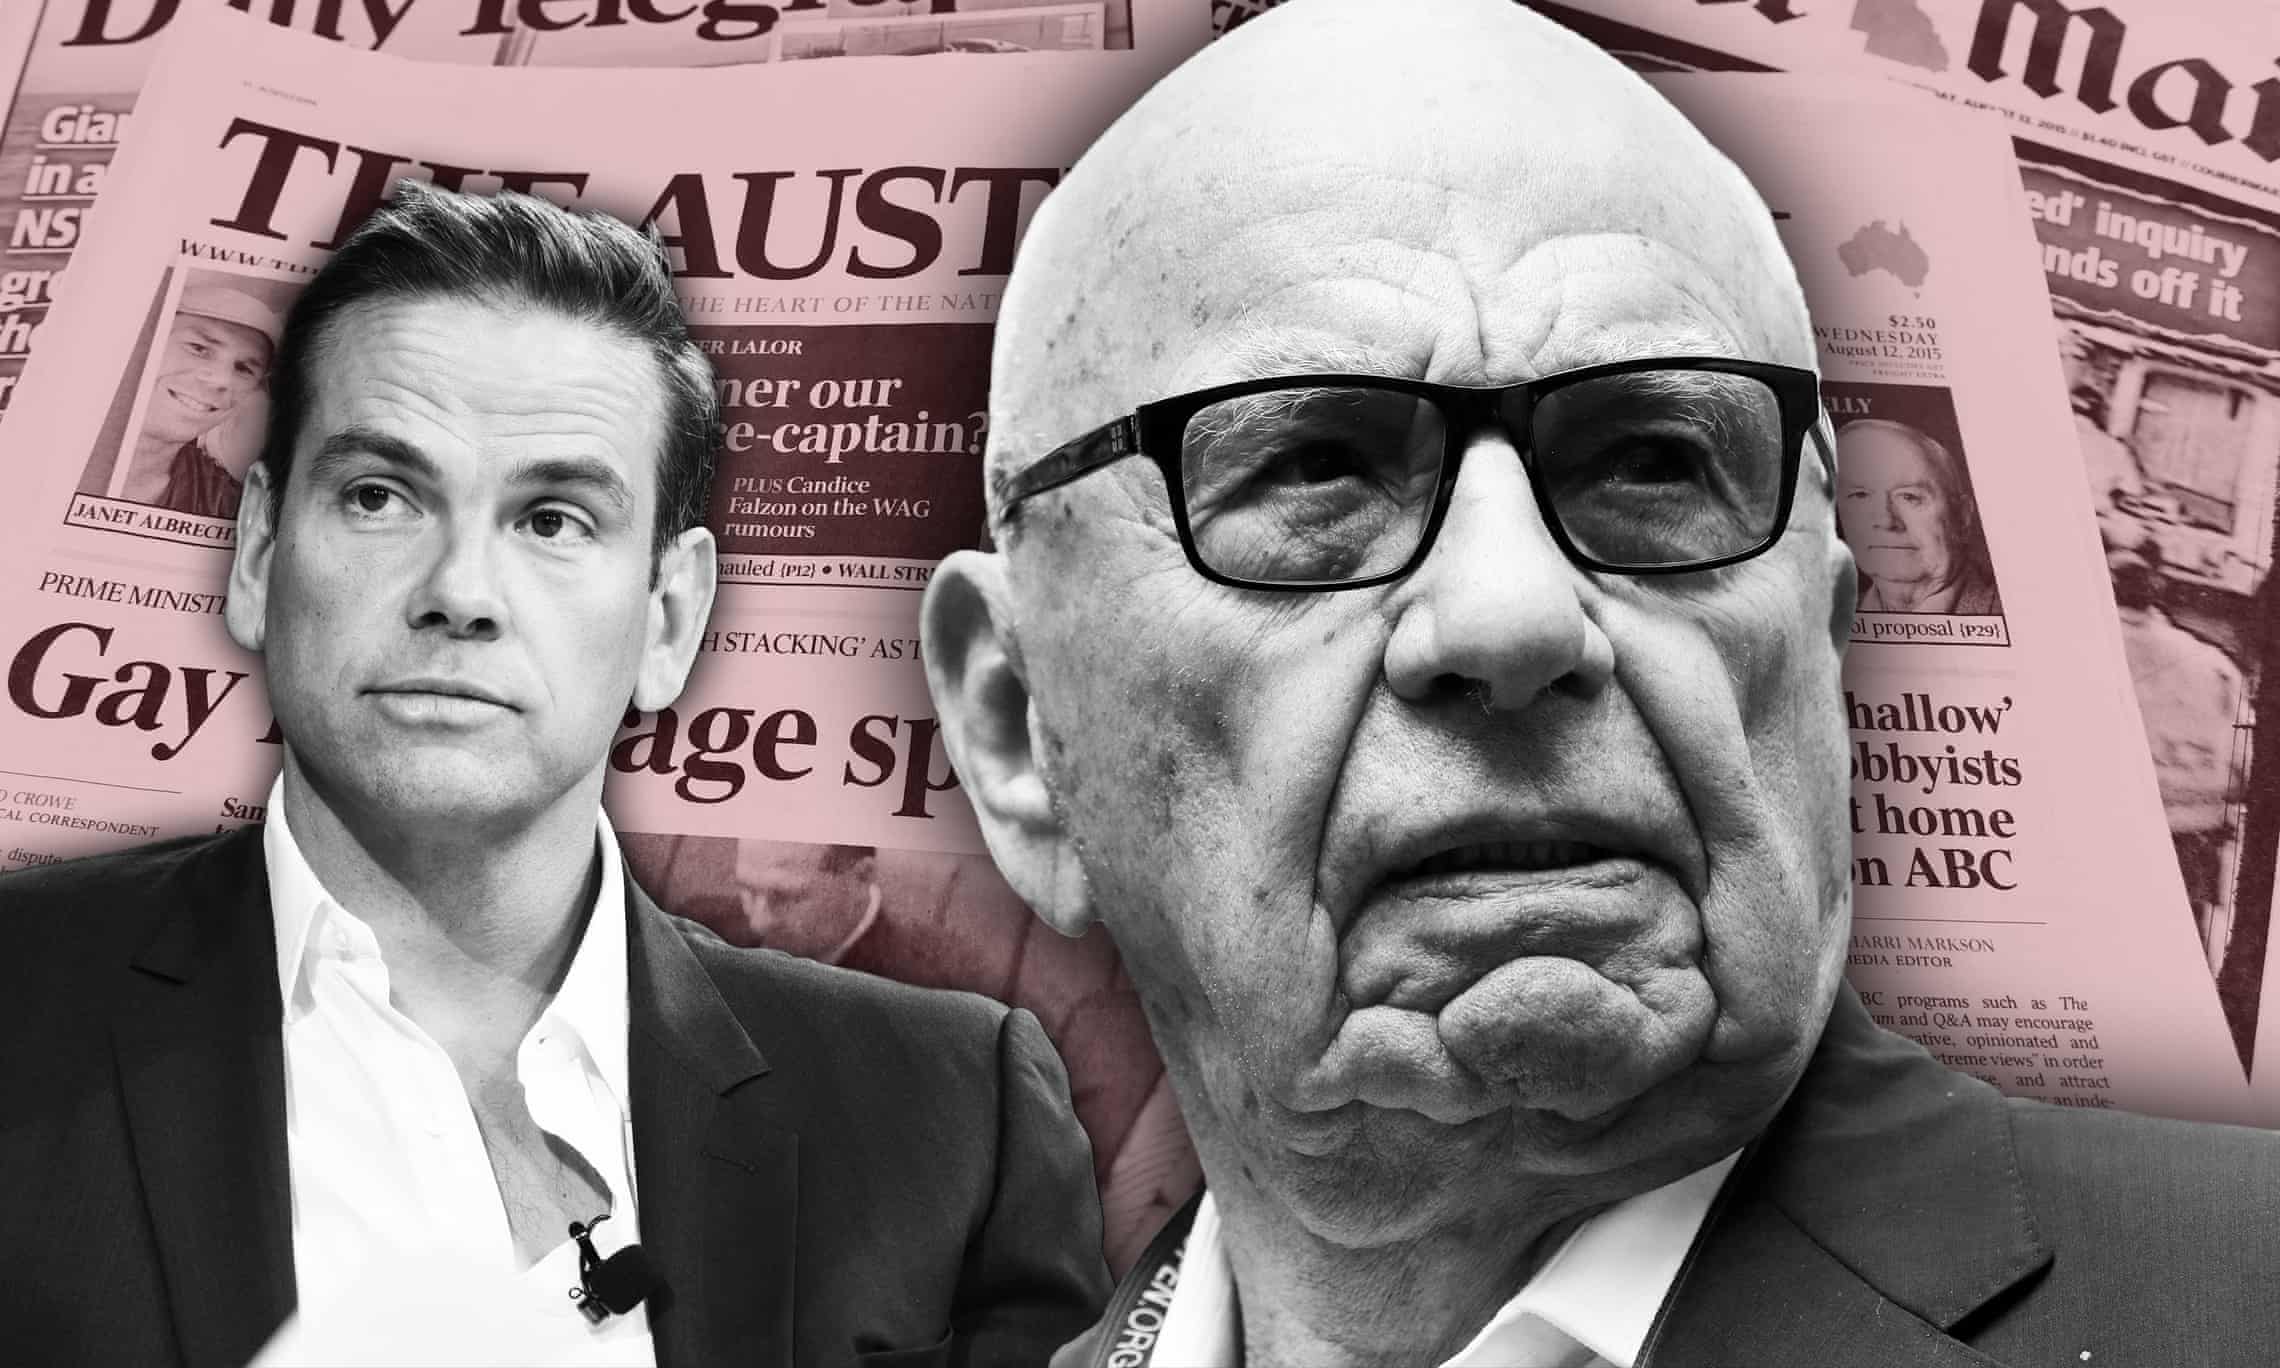 Murdoch's succession